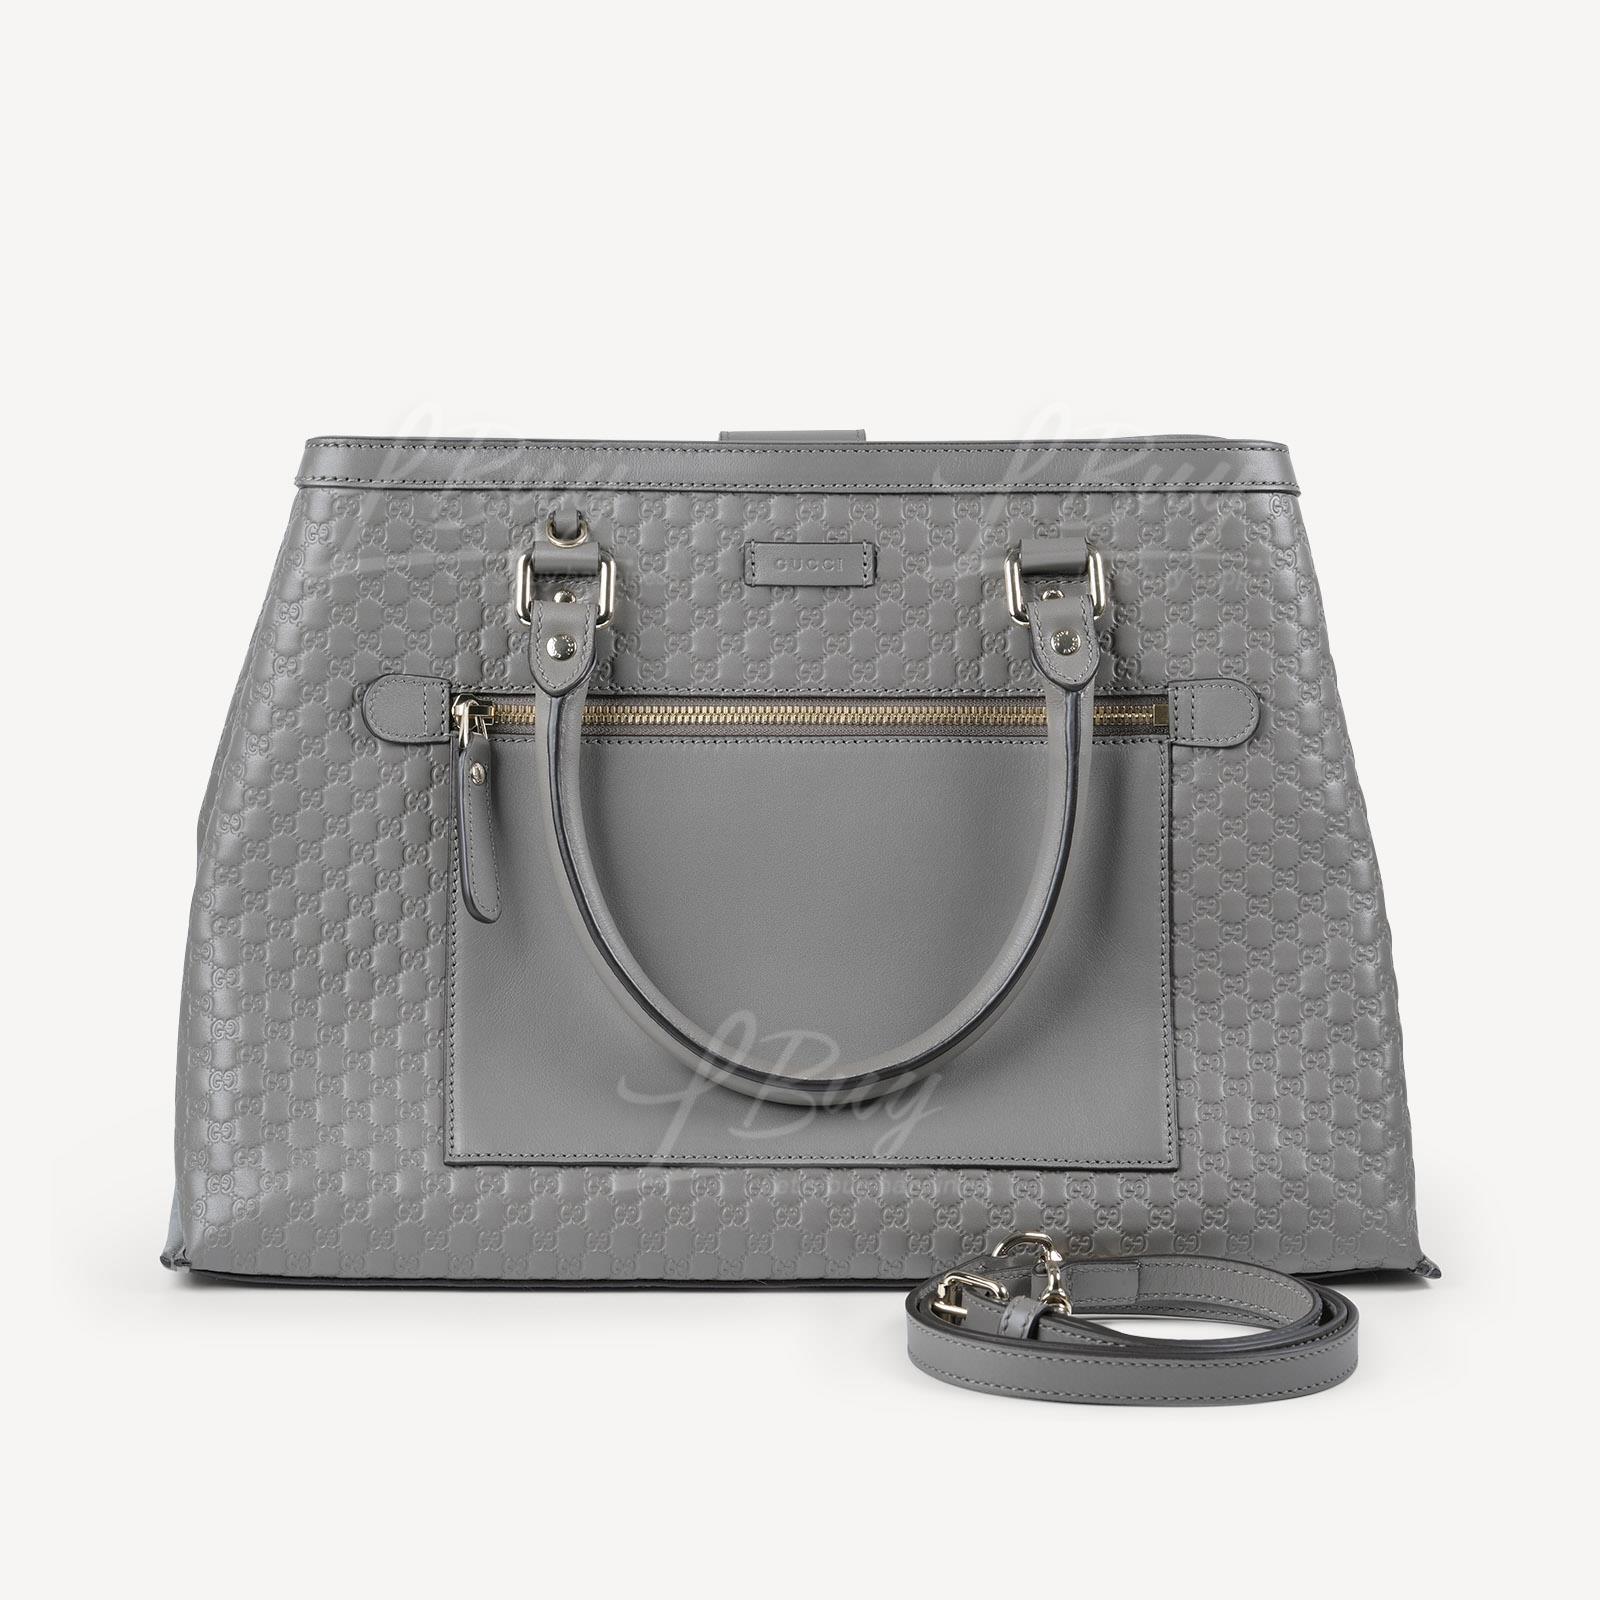 Gucci GG logo Leather Grey Tote Bag